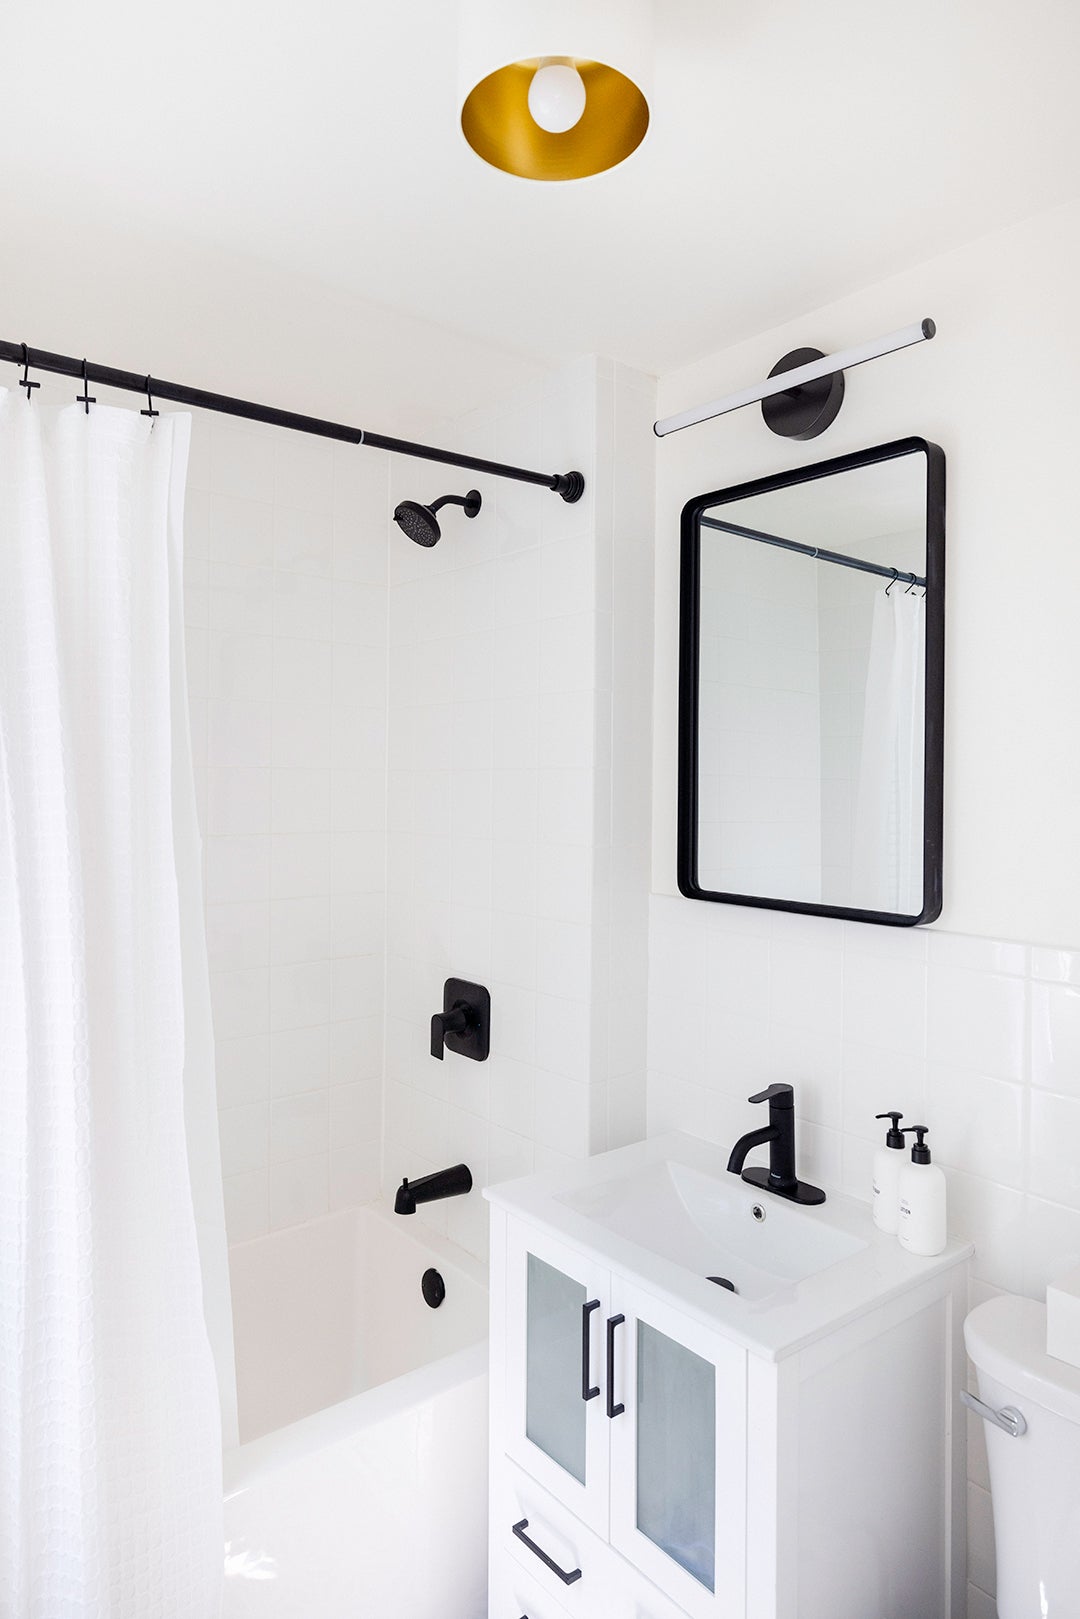 White bathroom with black vanity mirror and plumbing fixtures